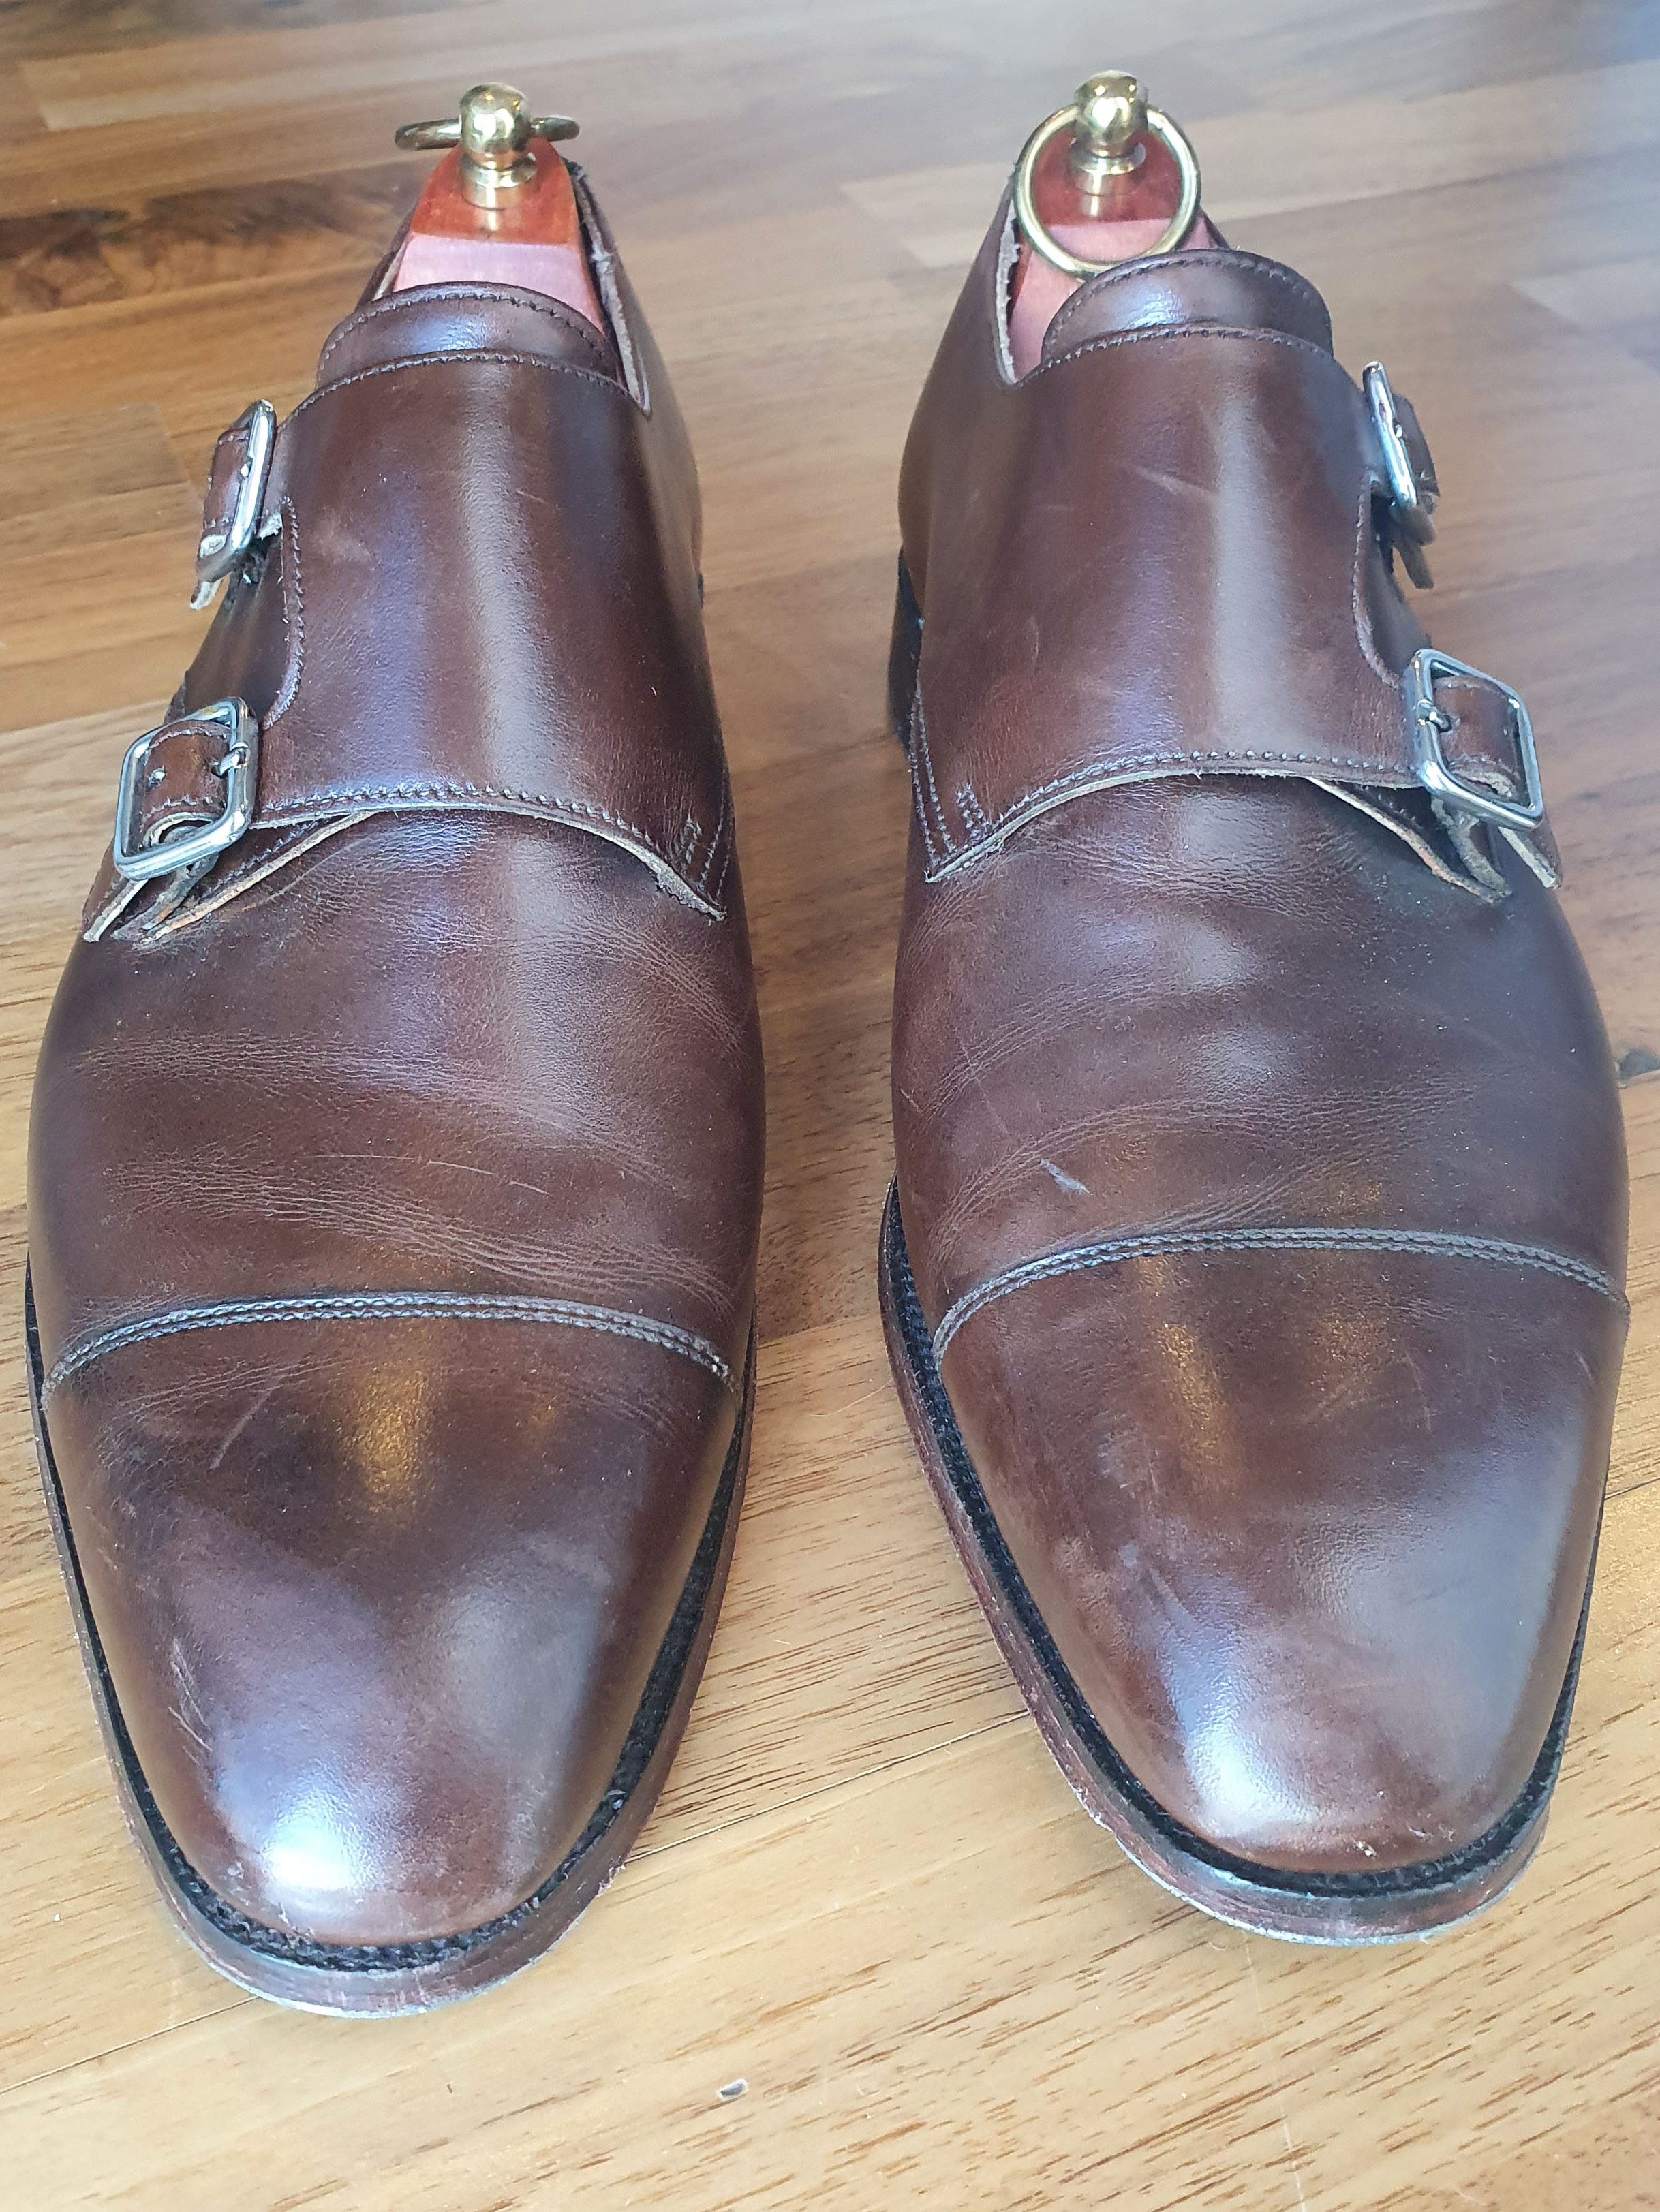 Scuffed pair of brown Crockett & Jones double monk shoes